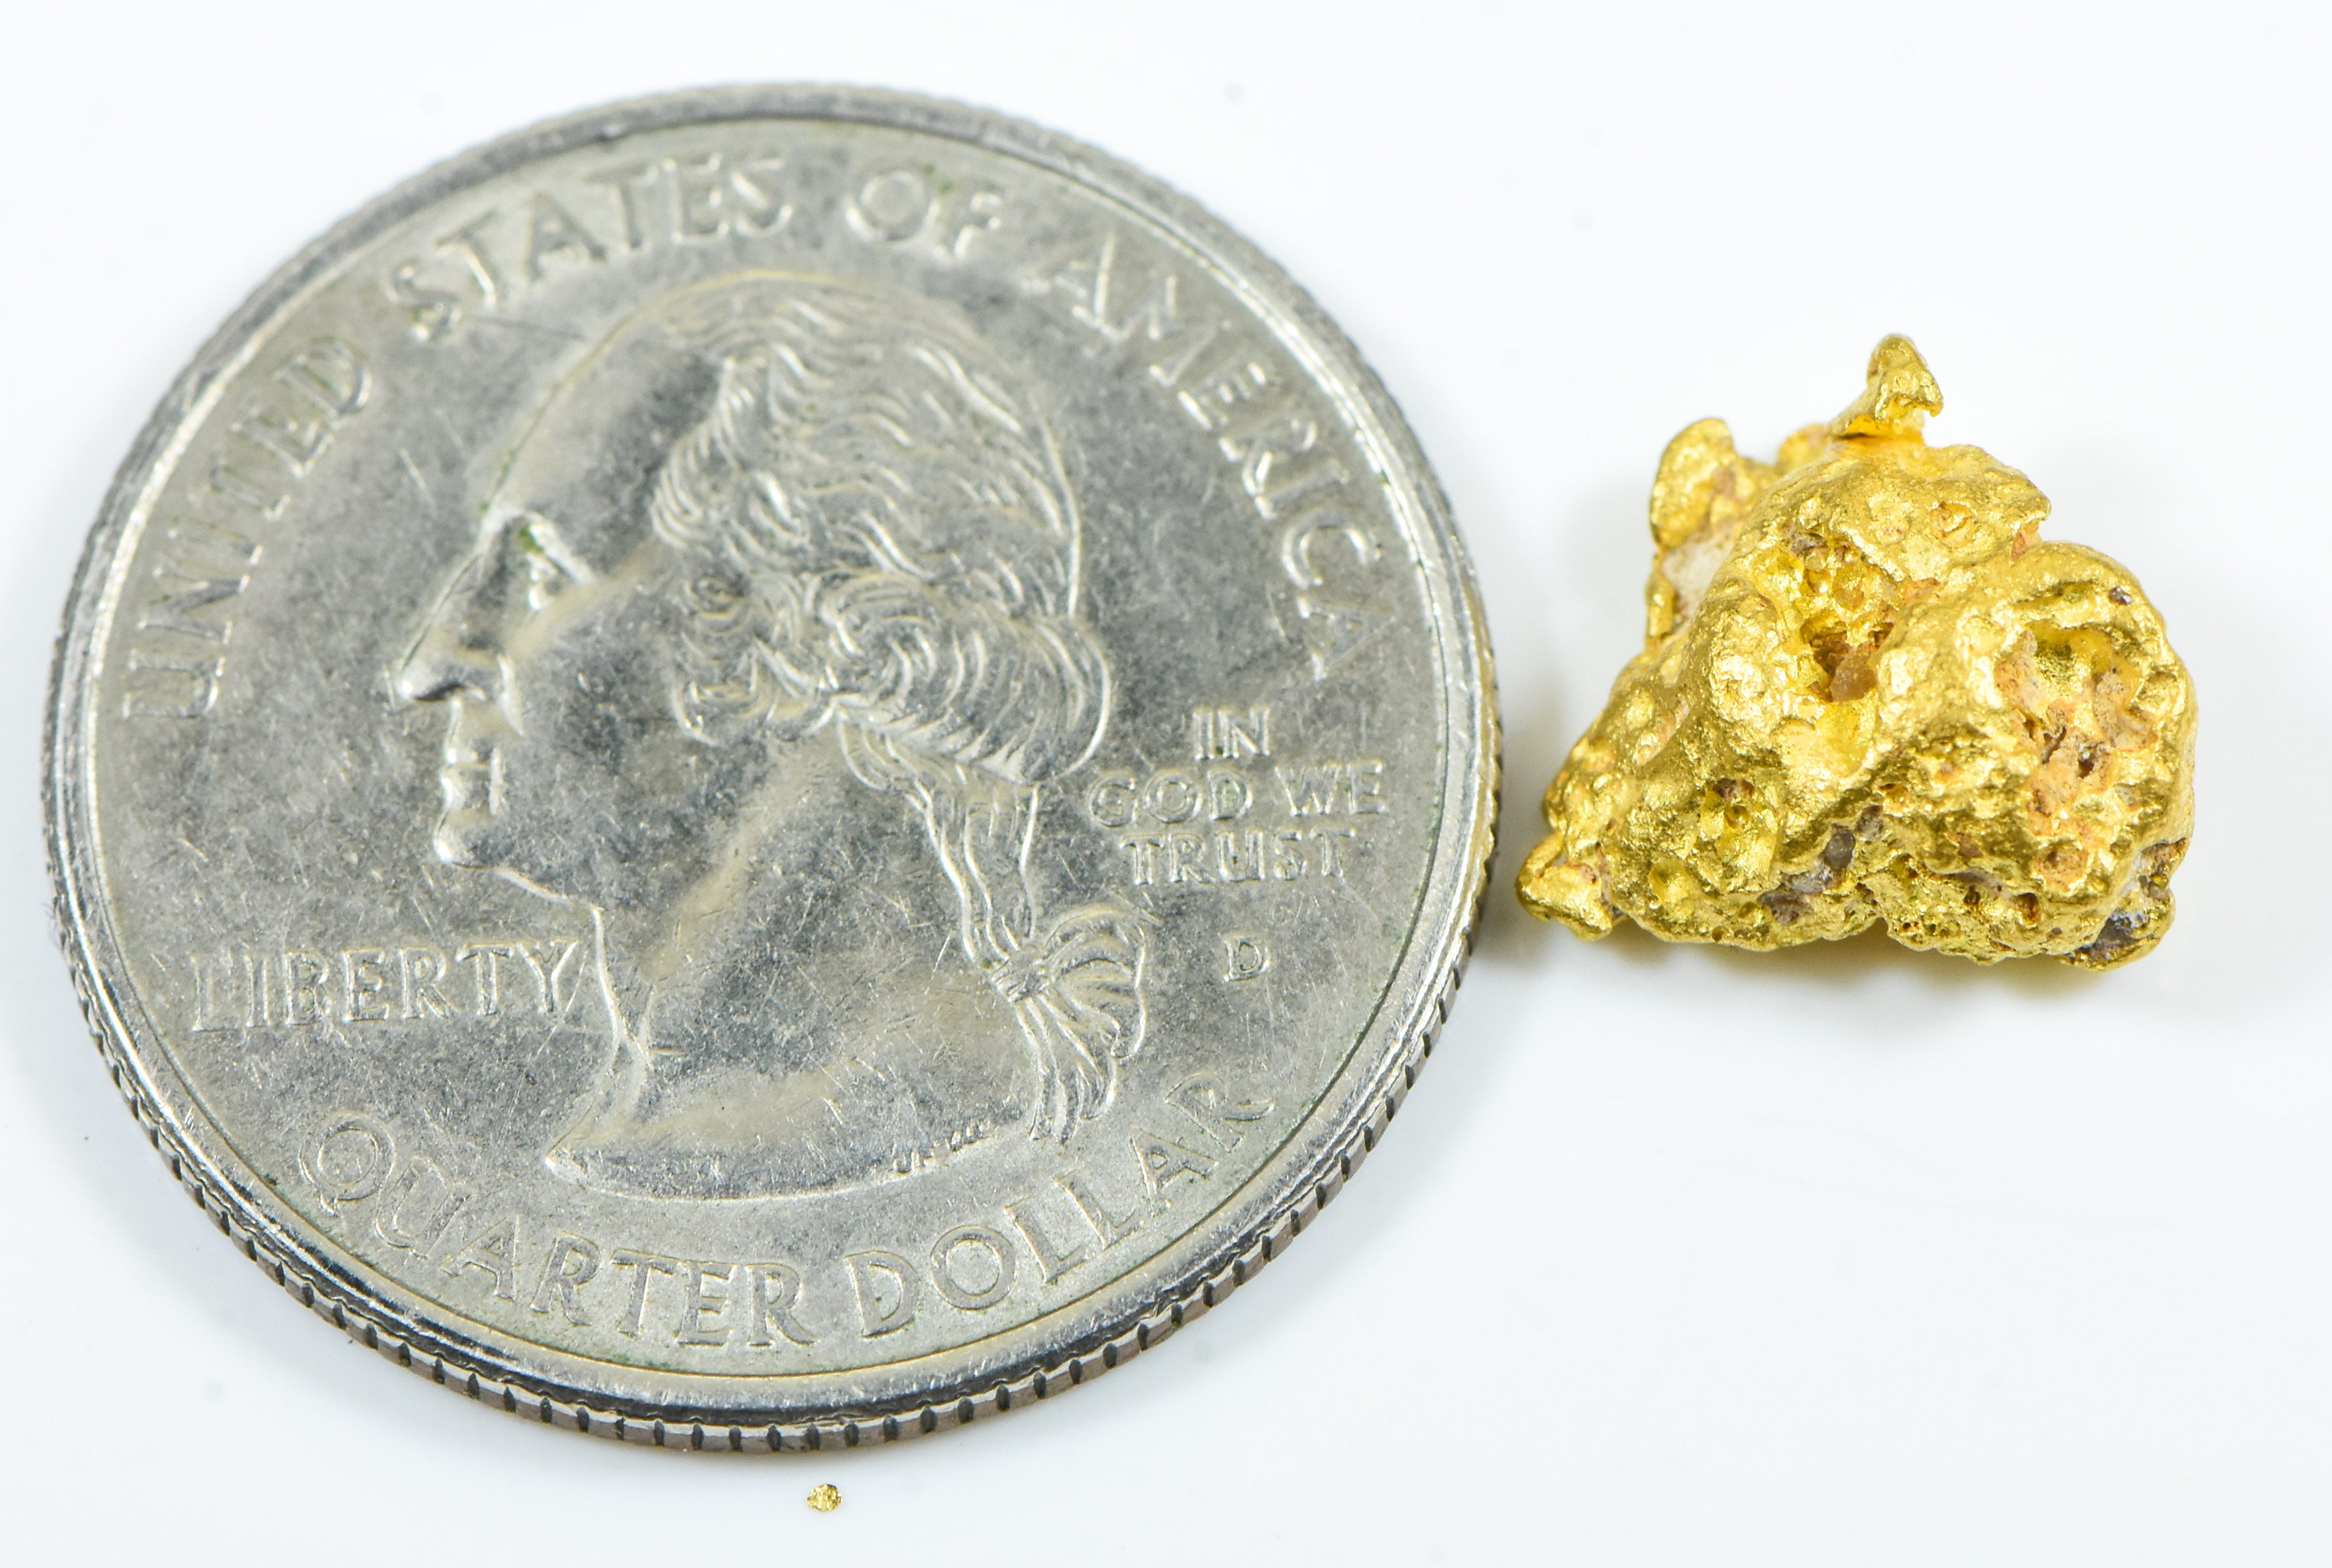 #1033 Natural Gold Nugget Australian 2.87 Grams Genuine